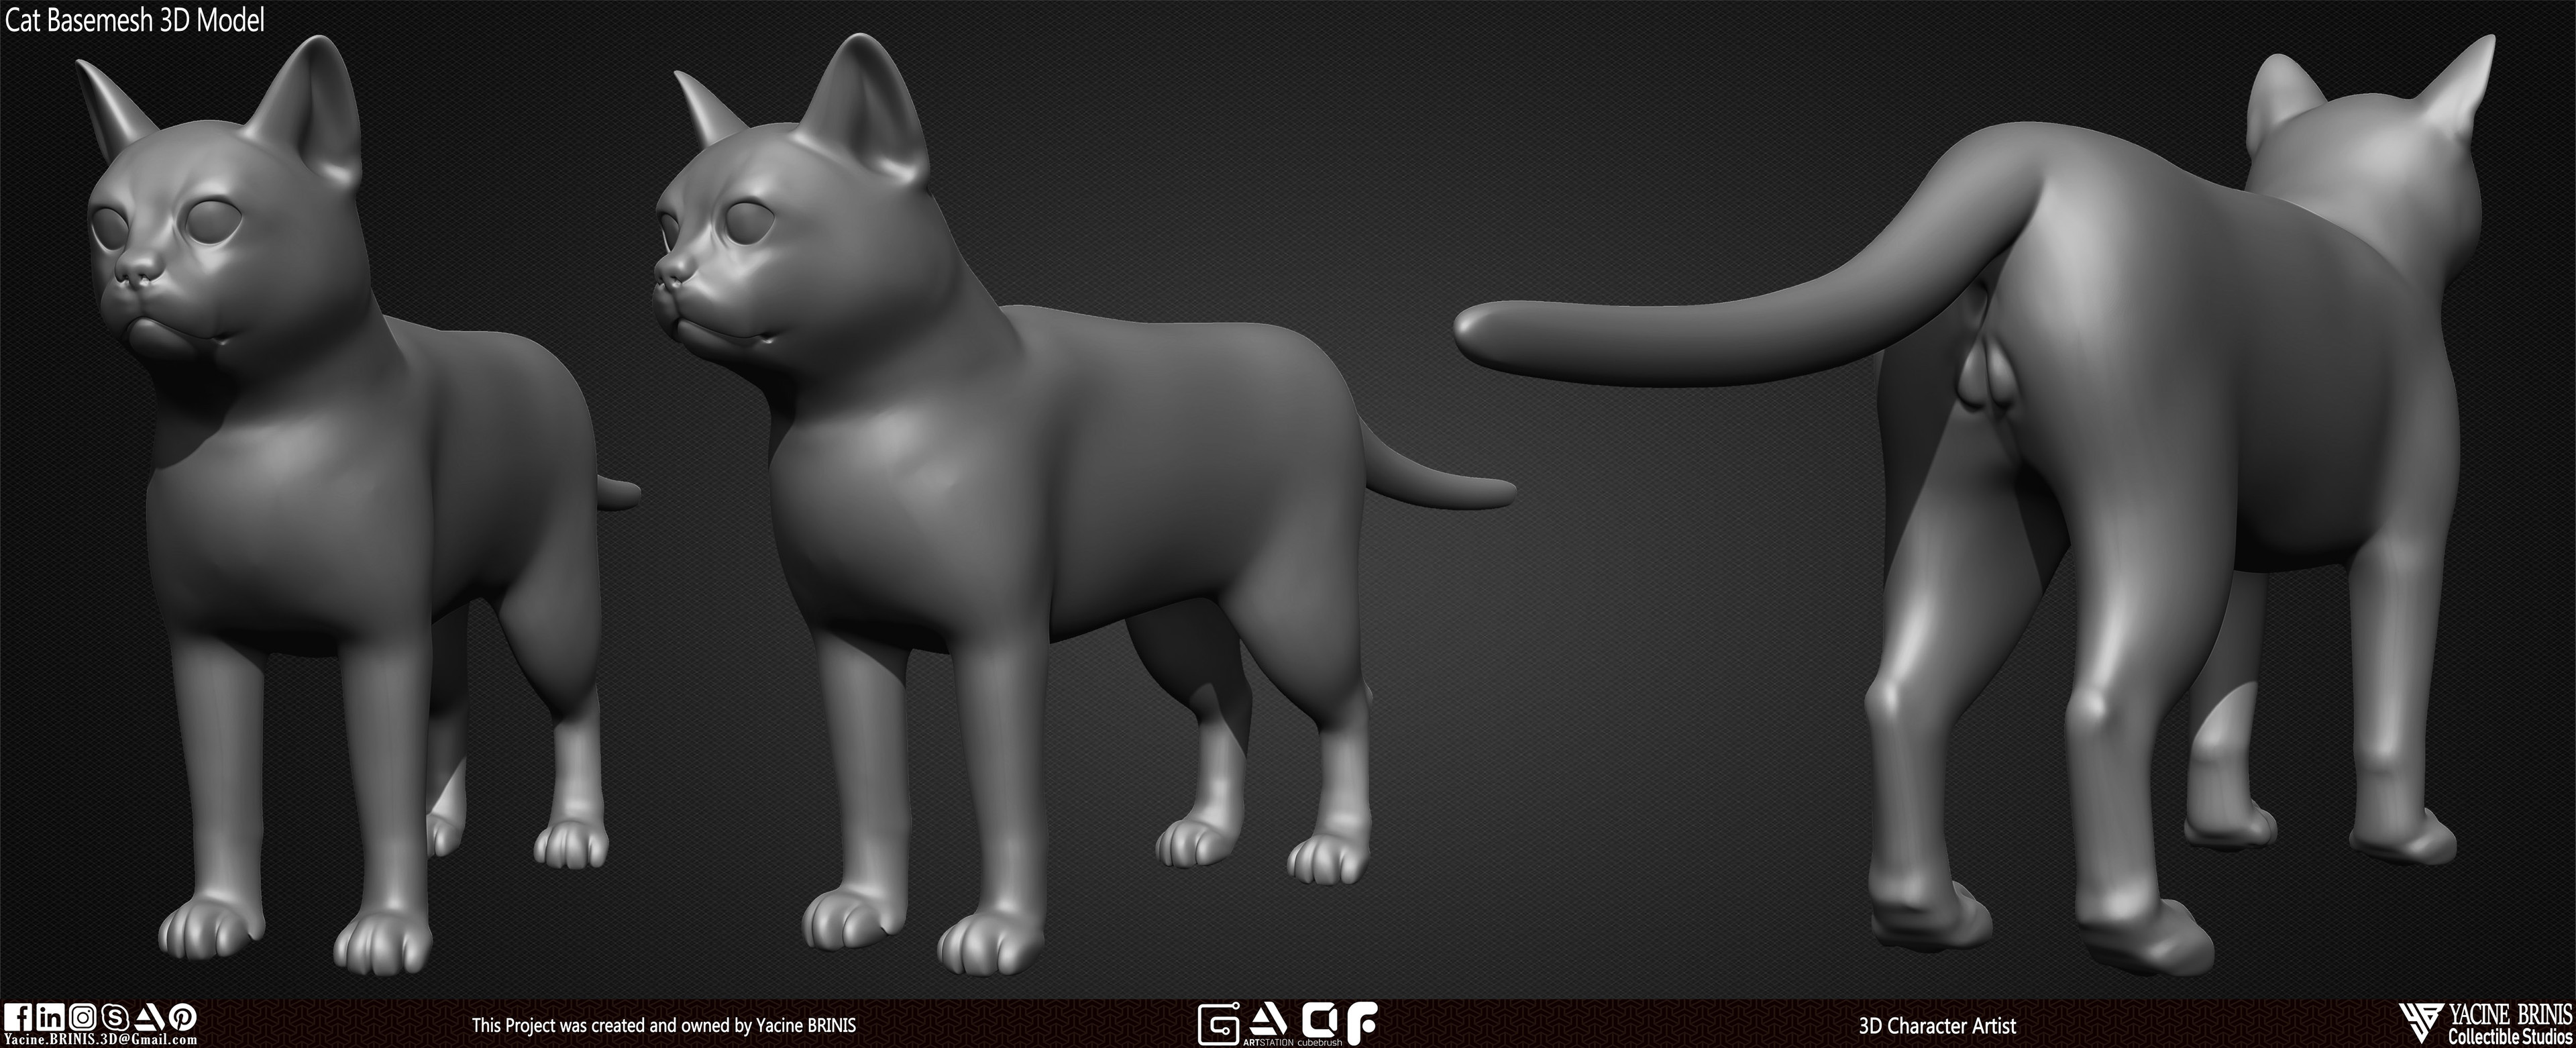 Cat Basemesh 3D Model sculpted By Yacine BRINIS set 003